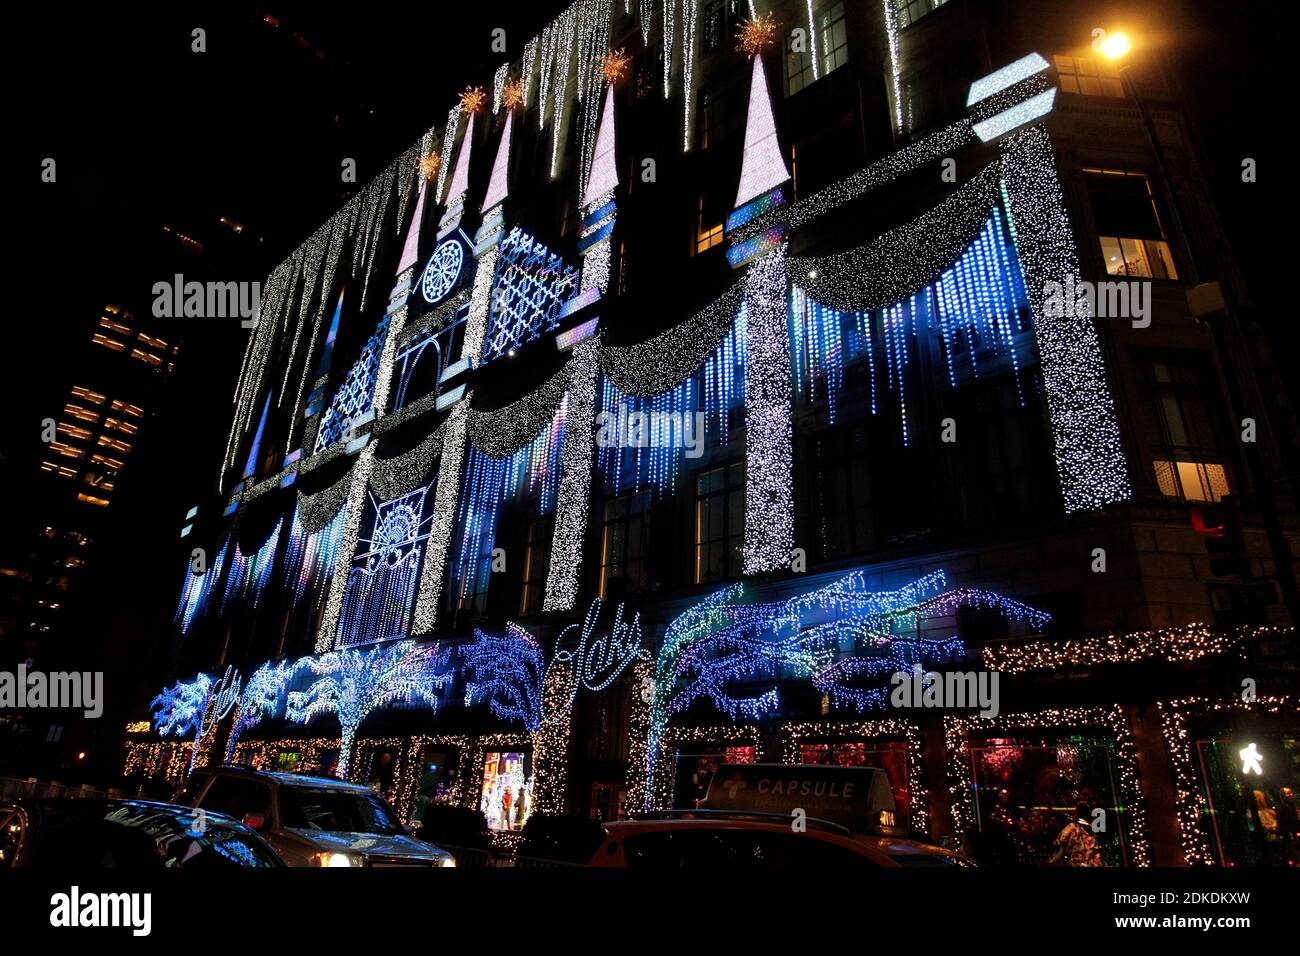 New York City, USA - December 6, 2019. Louis Vuitton Christmas window  displays on 5th Avenue, NYC Stock Photo - Alamy